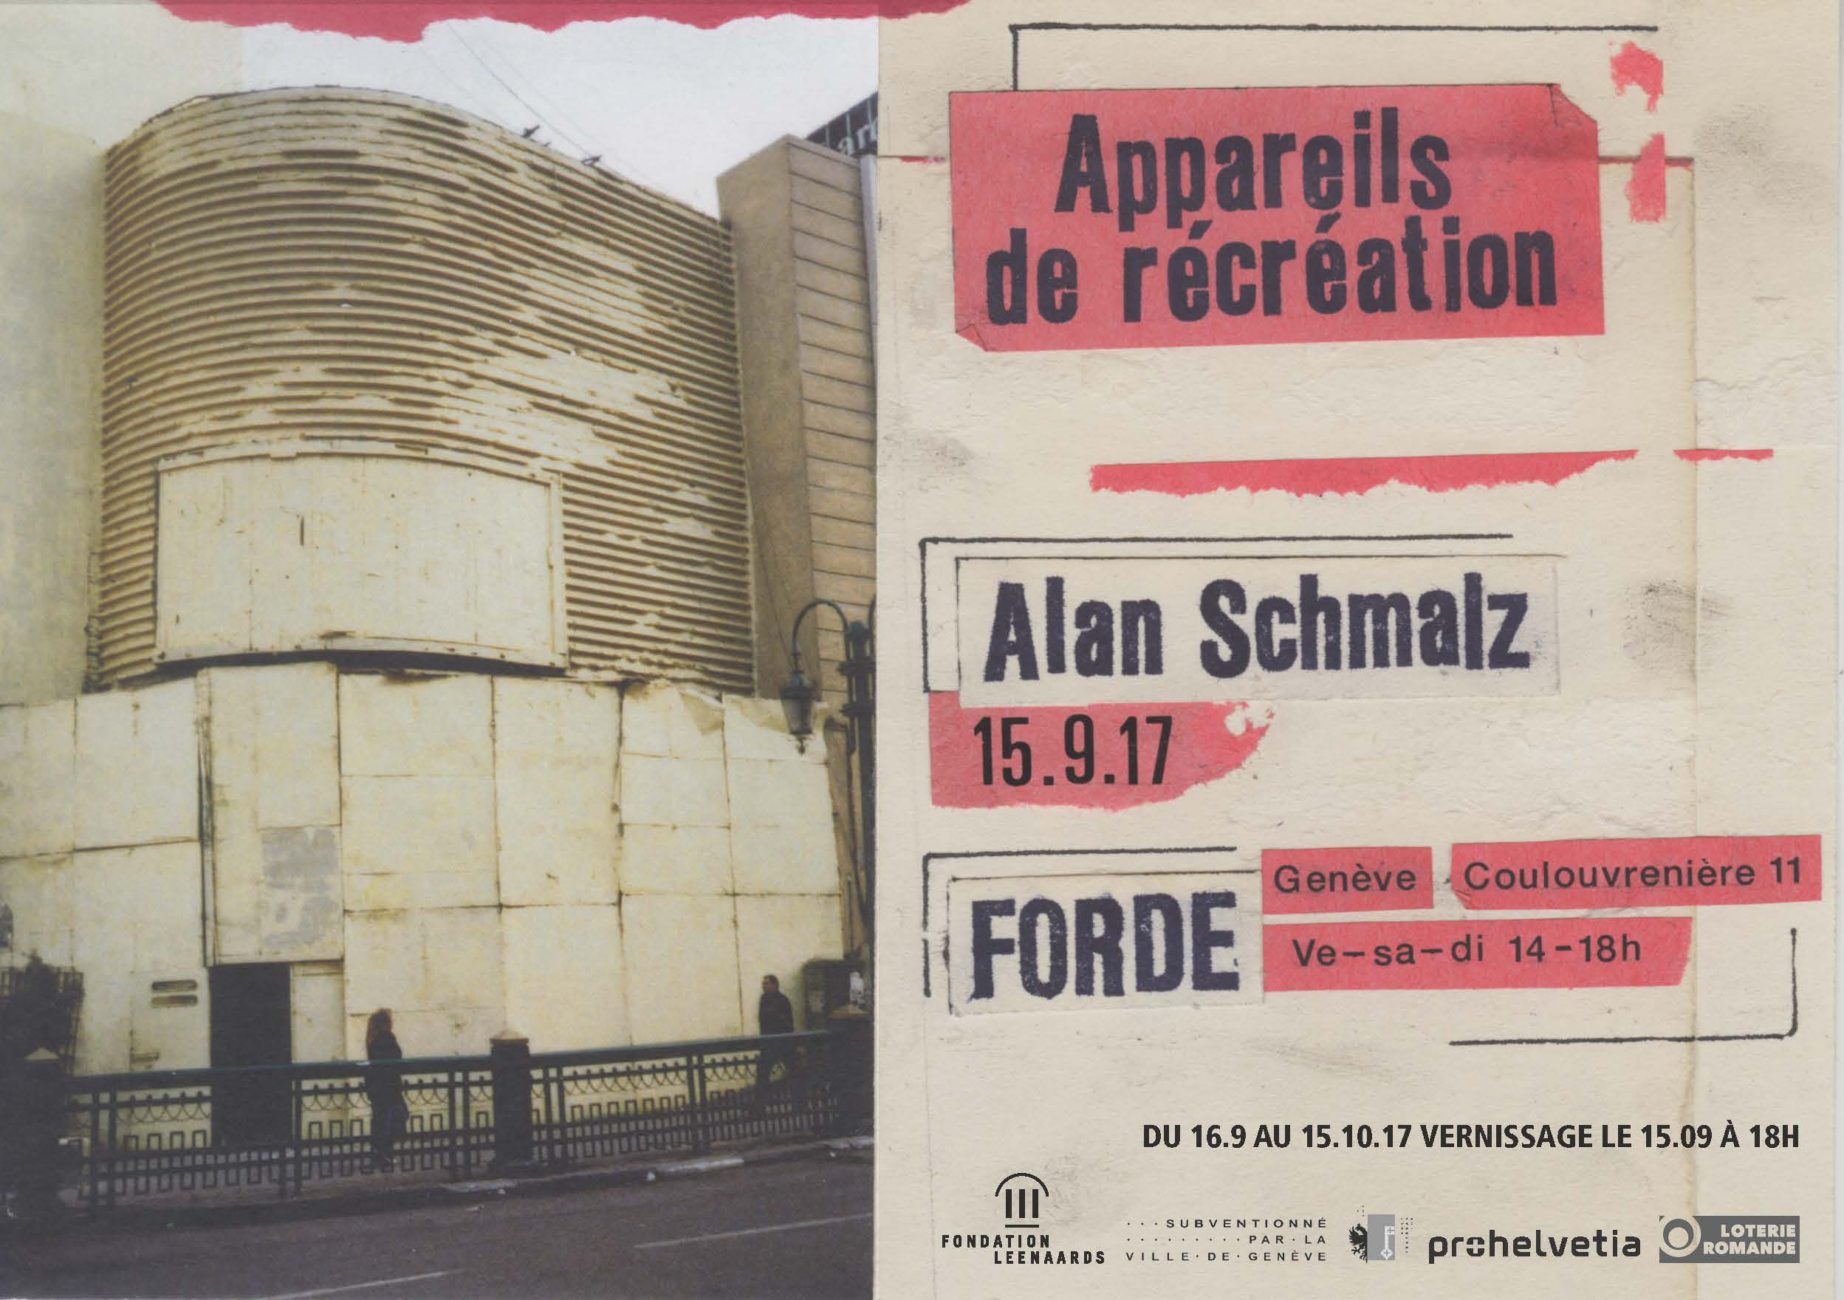 forde - flyer - Alan Schmalz – Appareils de récréation